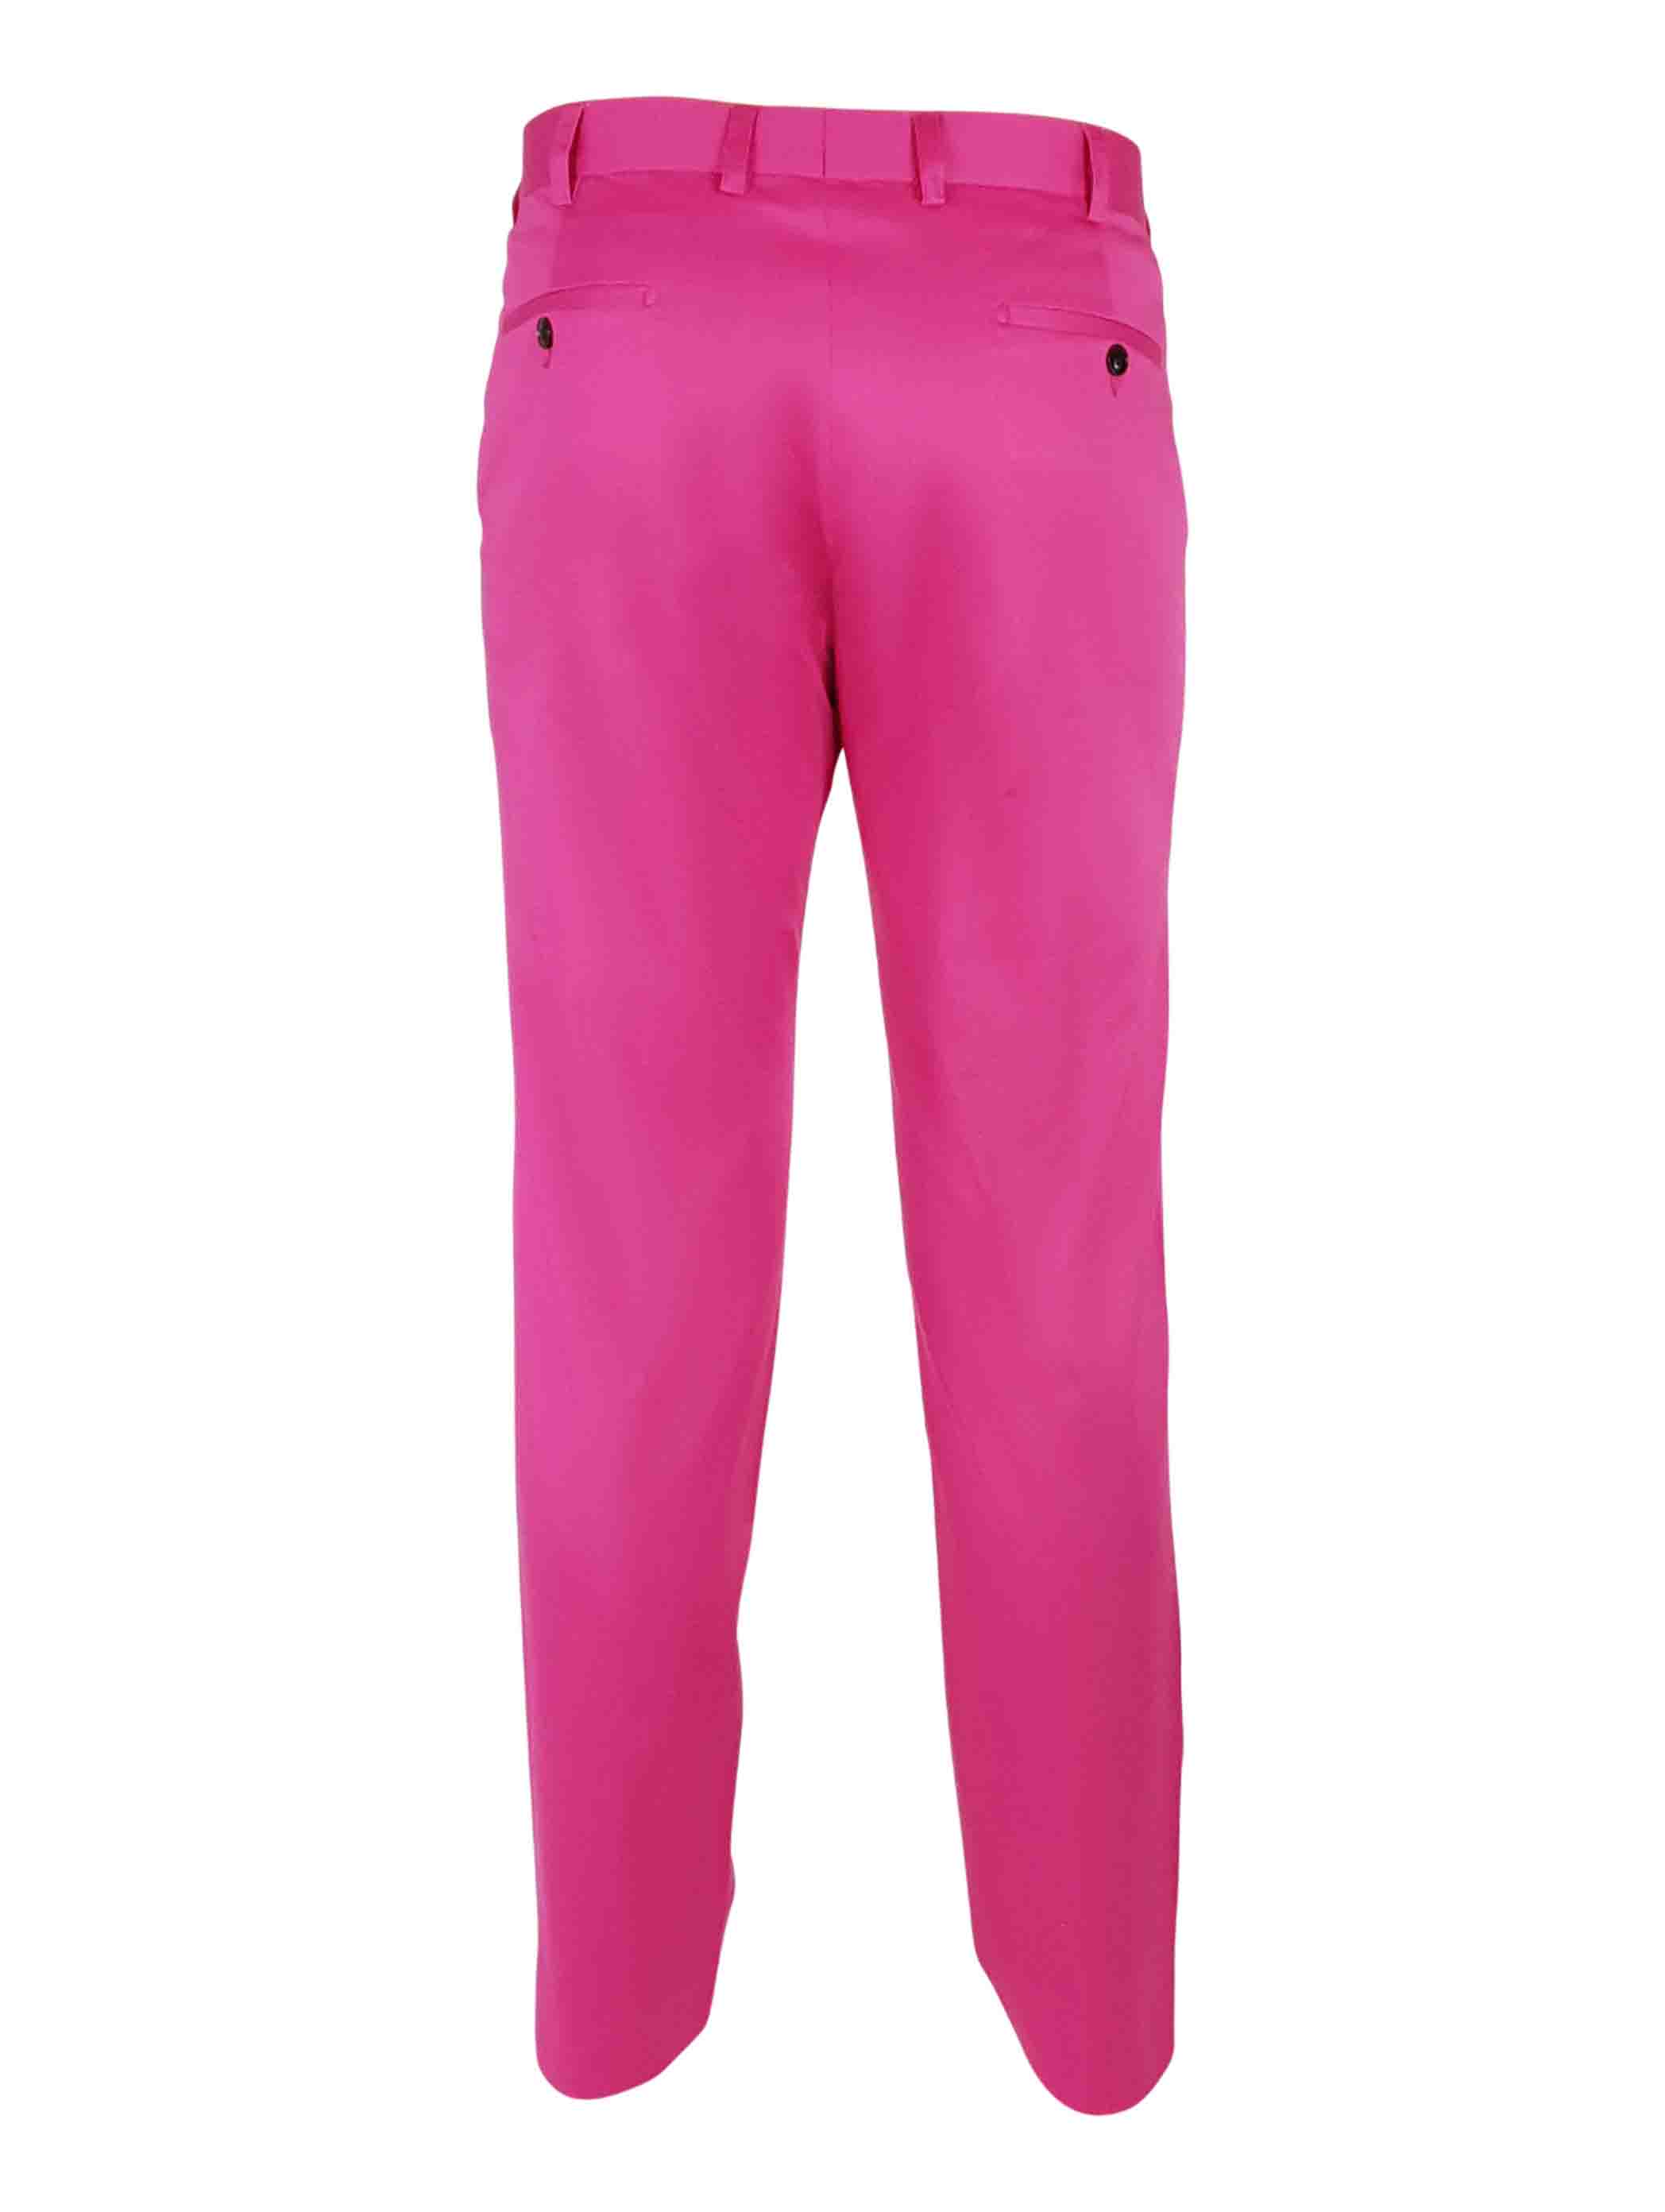 Men's Custom Chino - Pink - Uniform Edit